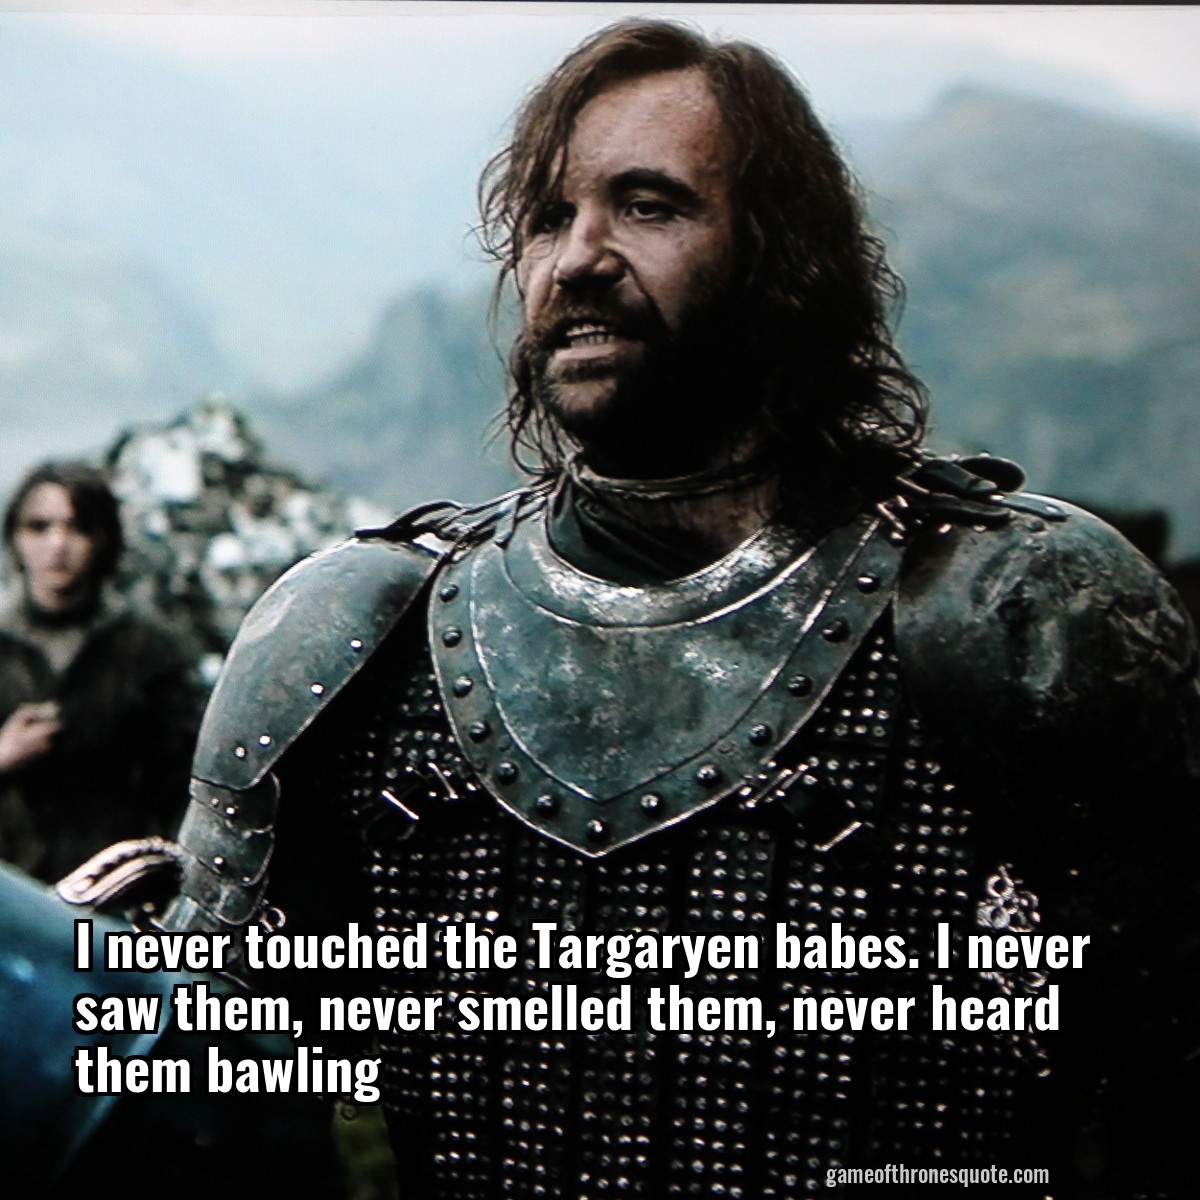 I never touched the Targaryen babes. I never saw them, never smelled them, never heard them bawling